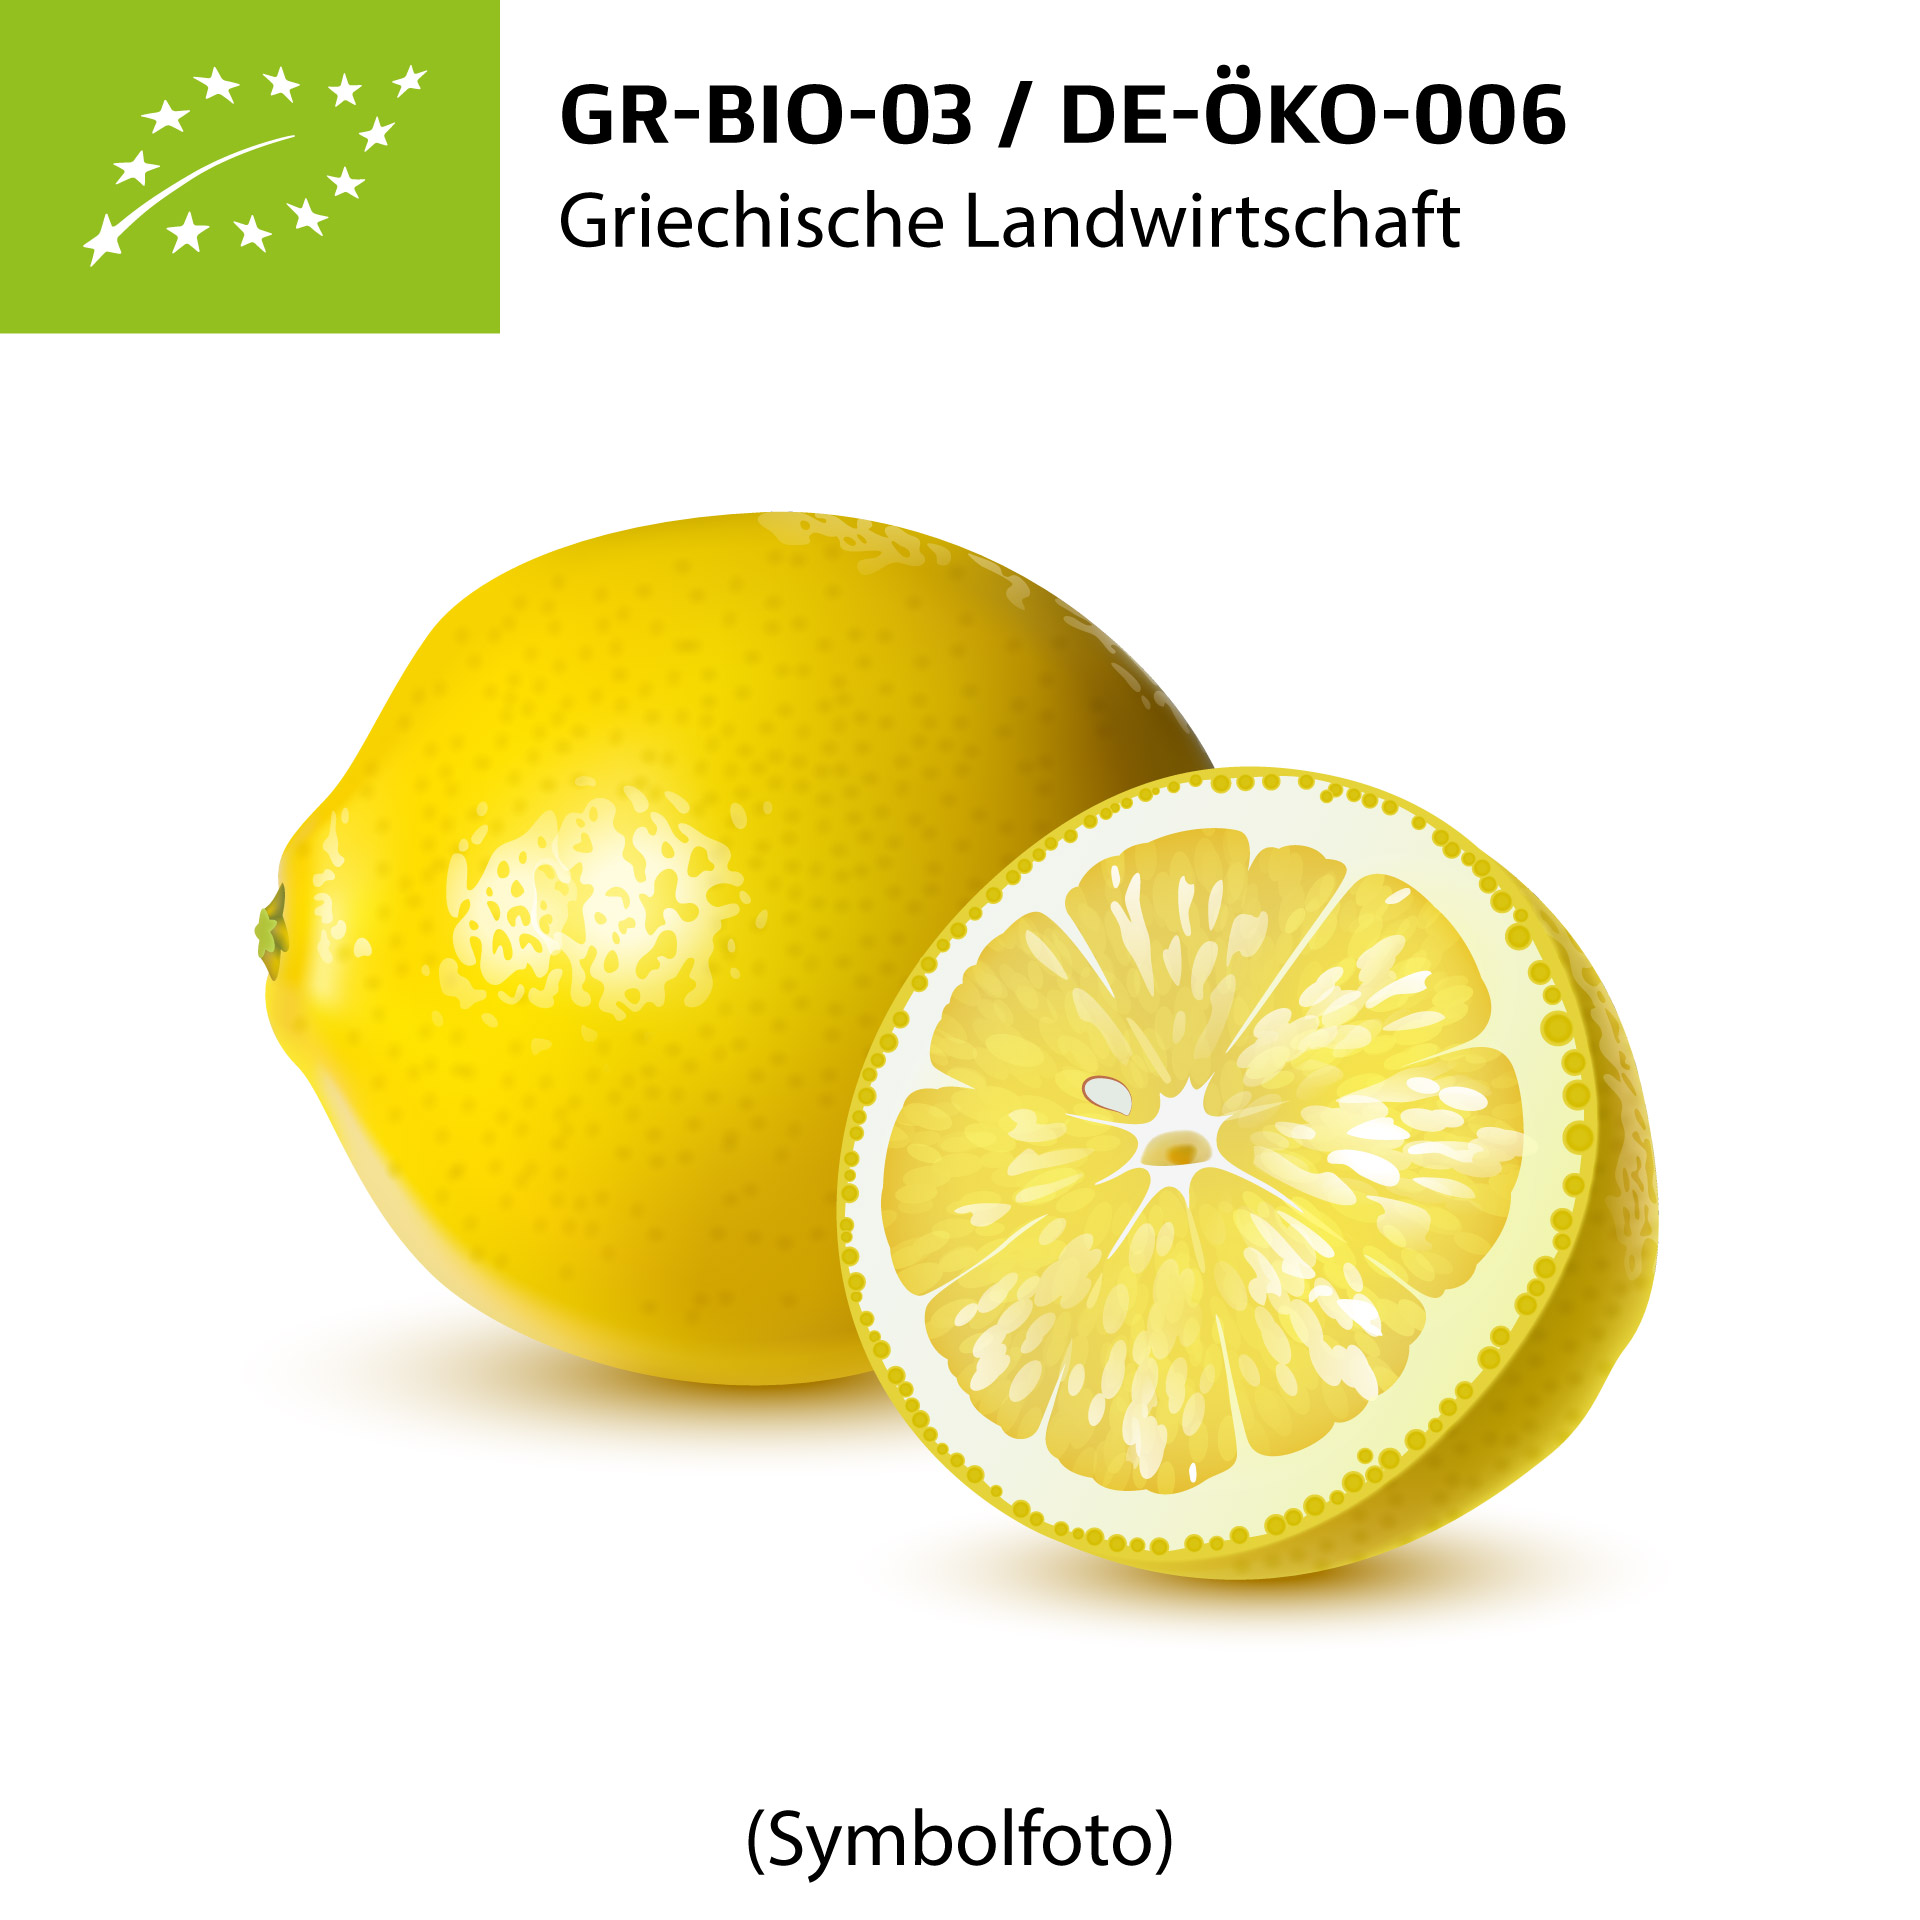  Frische BIO-Zitronen "ZAMPETAKI" aus Kreta ca. 1 kg Netz